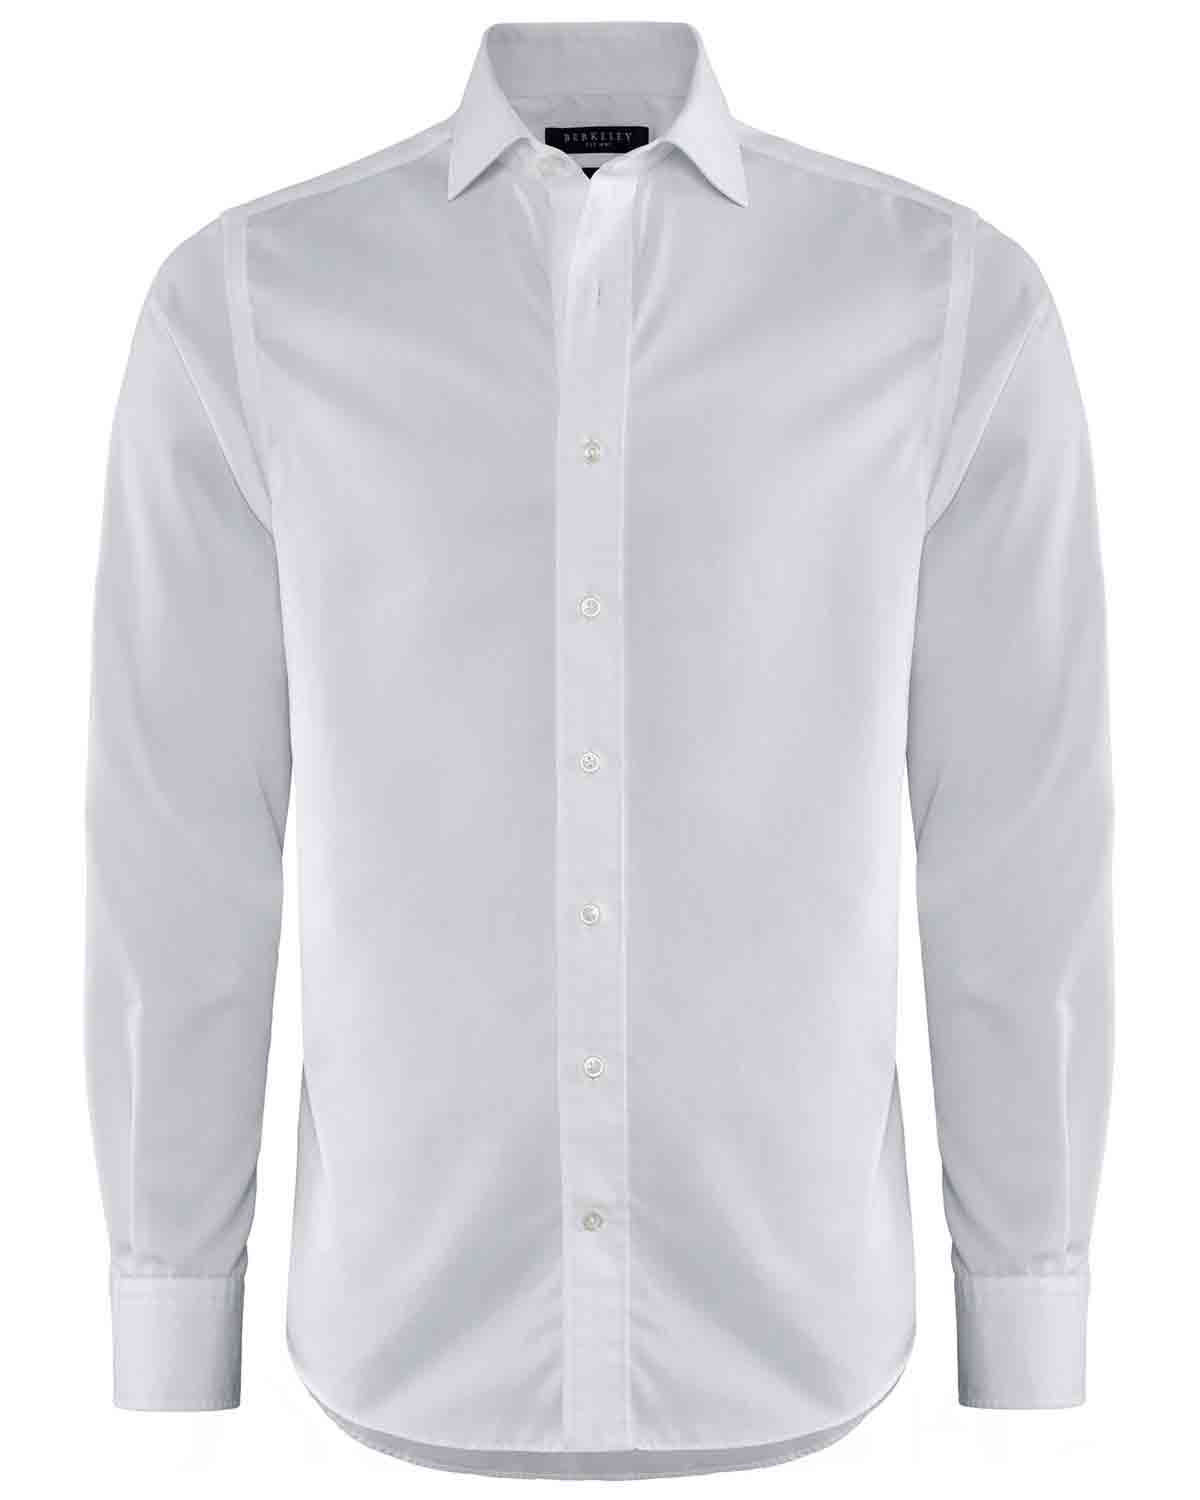 Plainton Tailored Shirt White